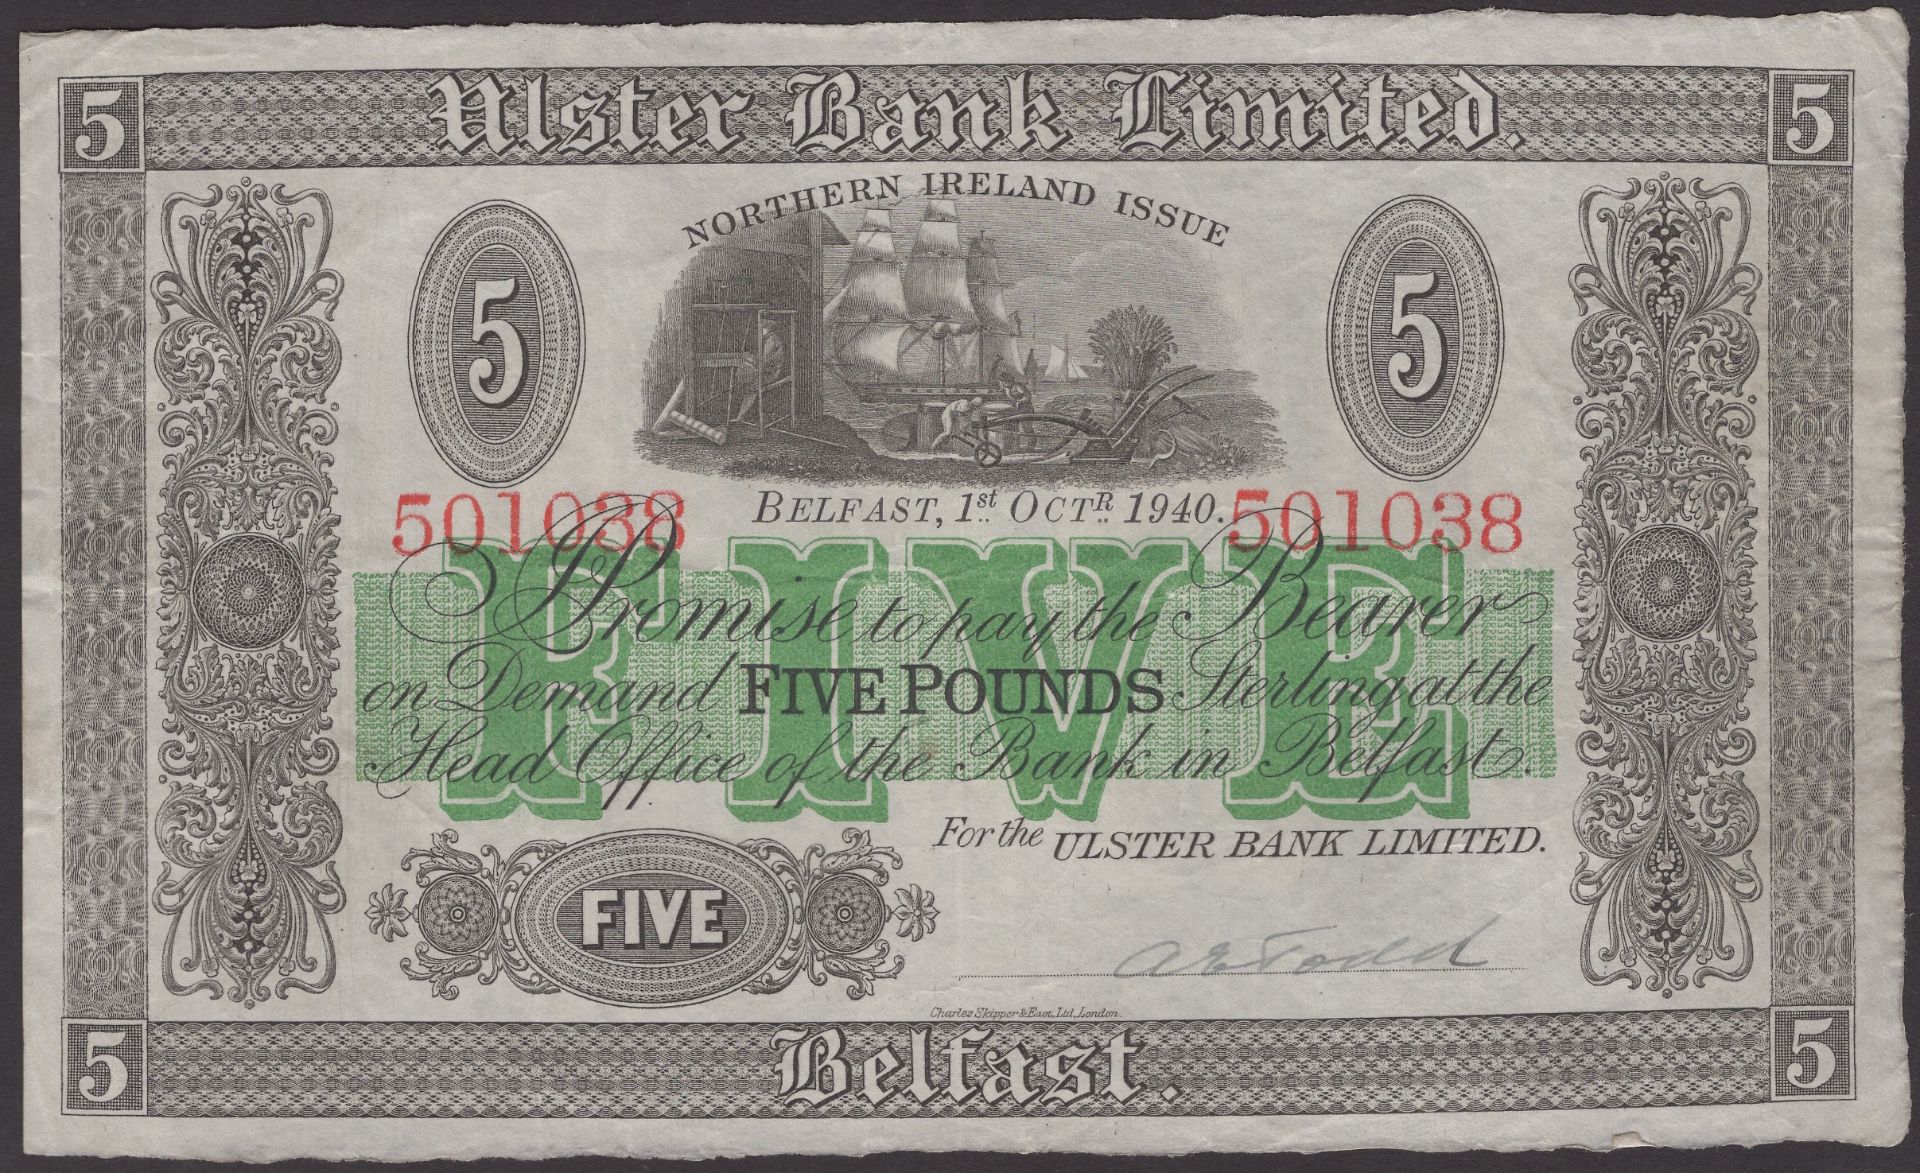 Ulster Bank Limited, Â£5, 1 October 1940, serial number 501038, Todd signature, fresh origina...